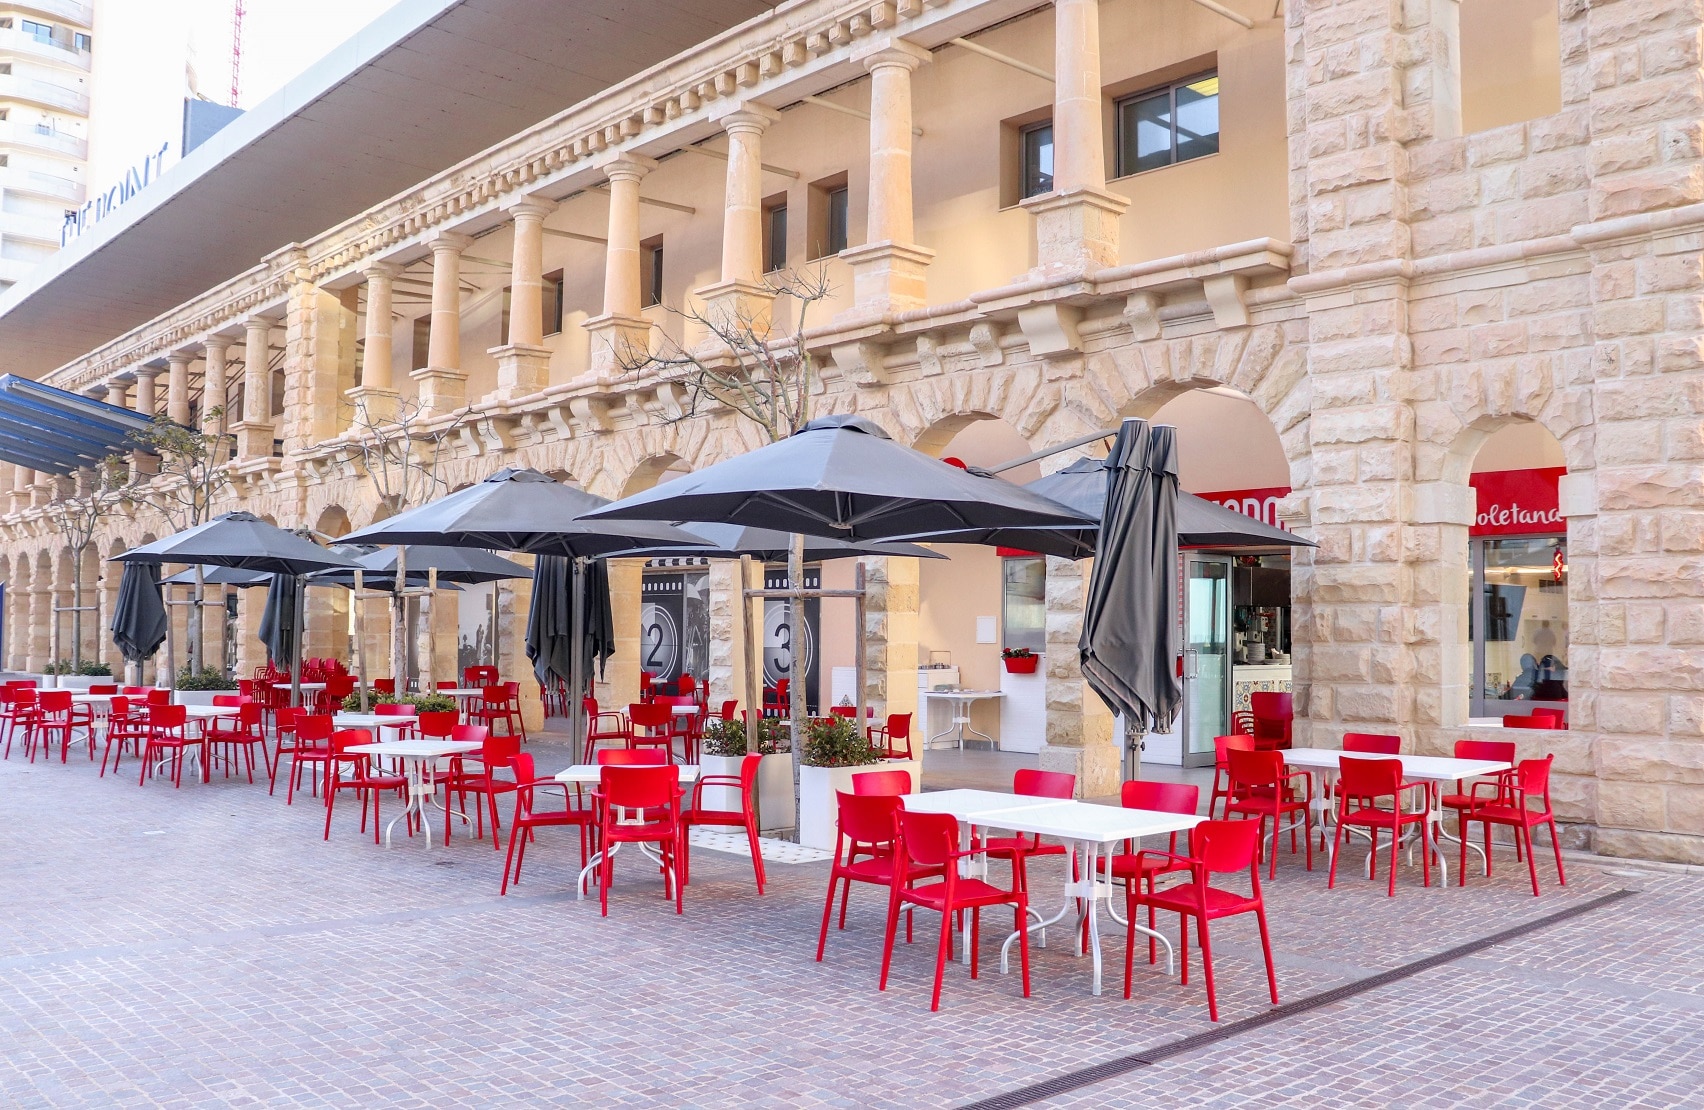 Rossopomodoro the Neapolitan artisan pizzeria chain opens its doors at Pjazza Tigné